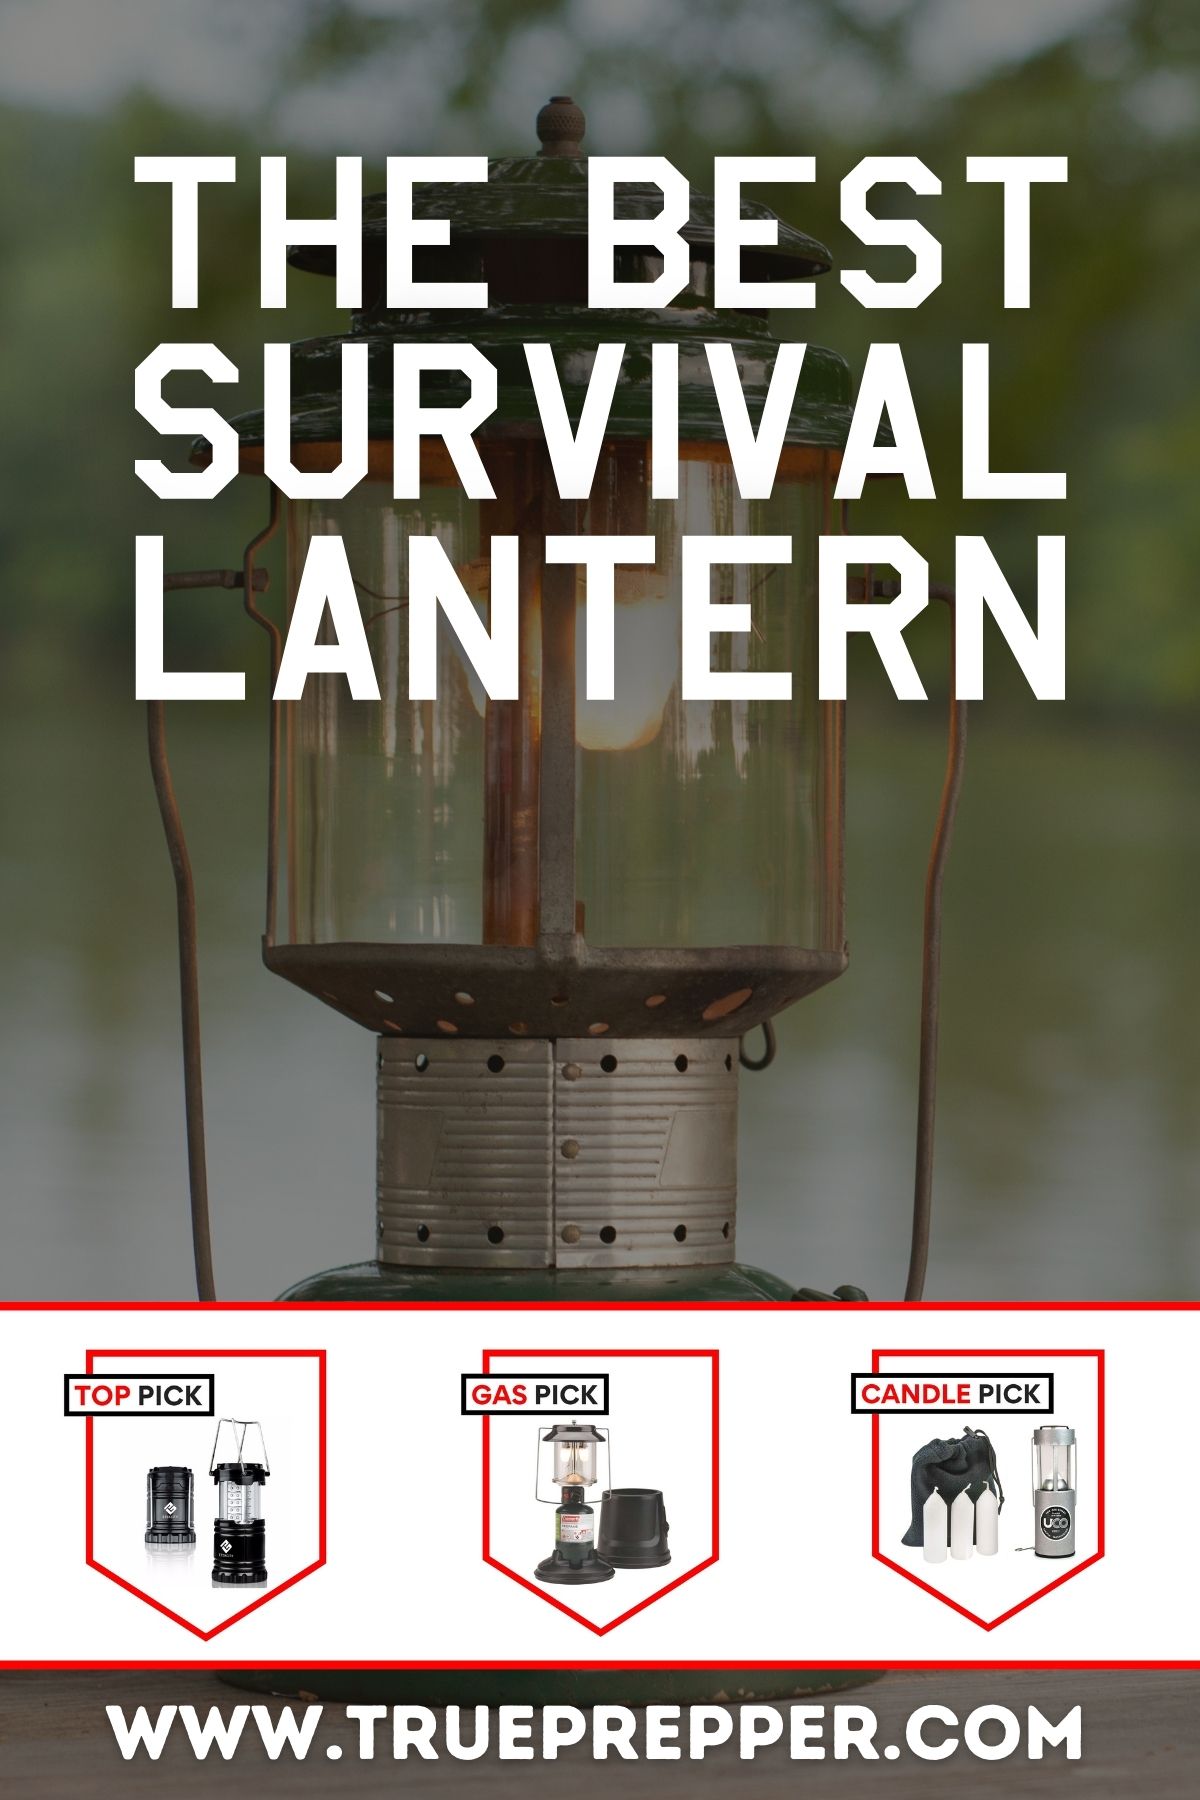 The Best Survival Lantern